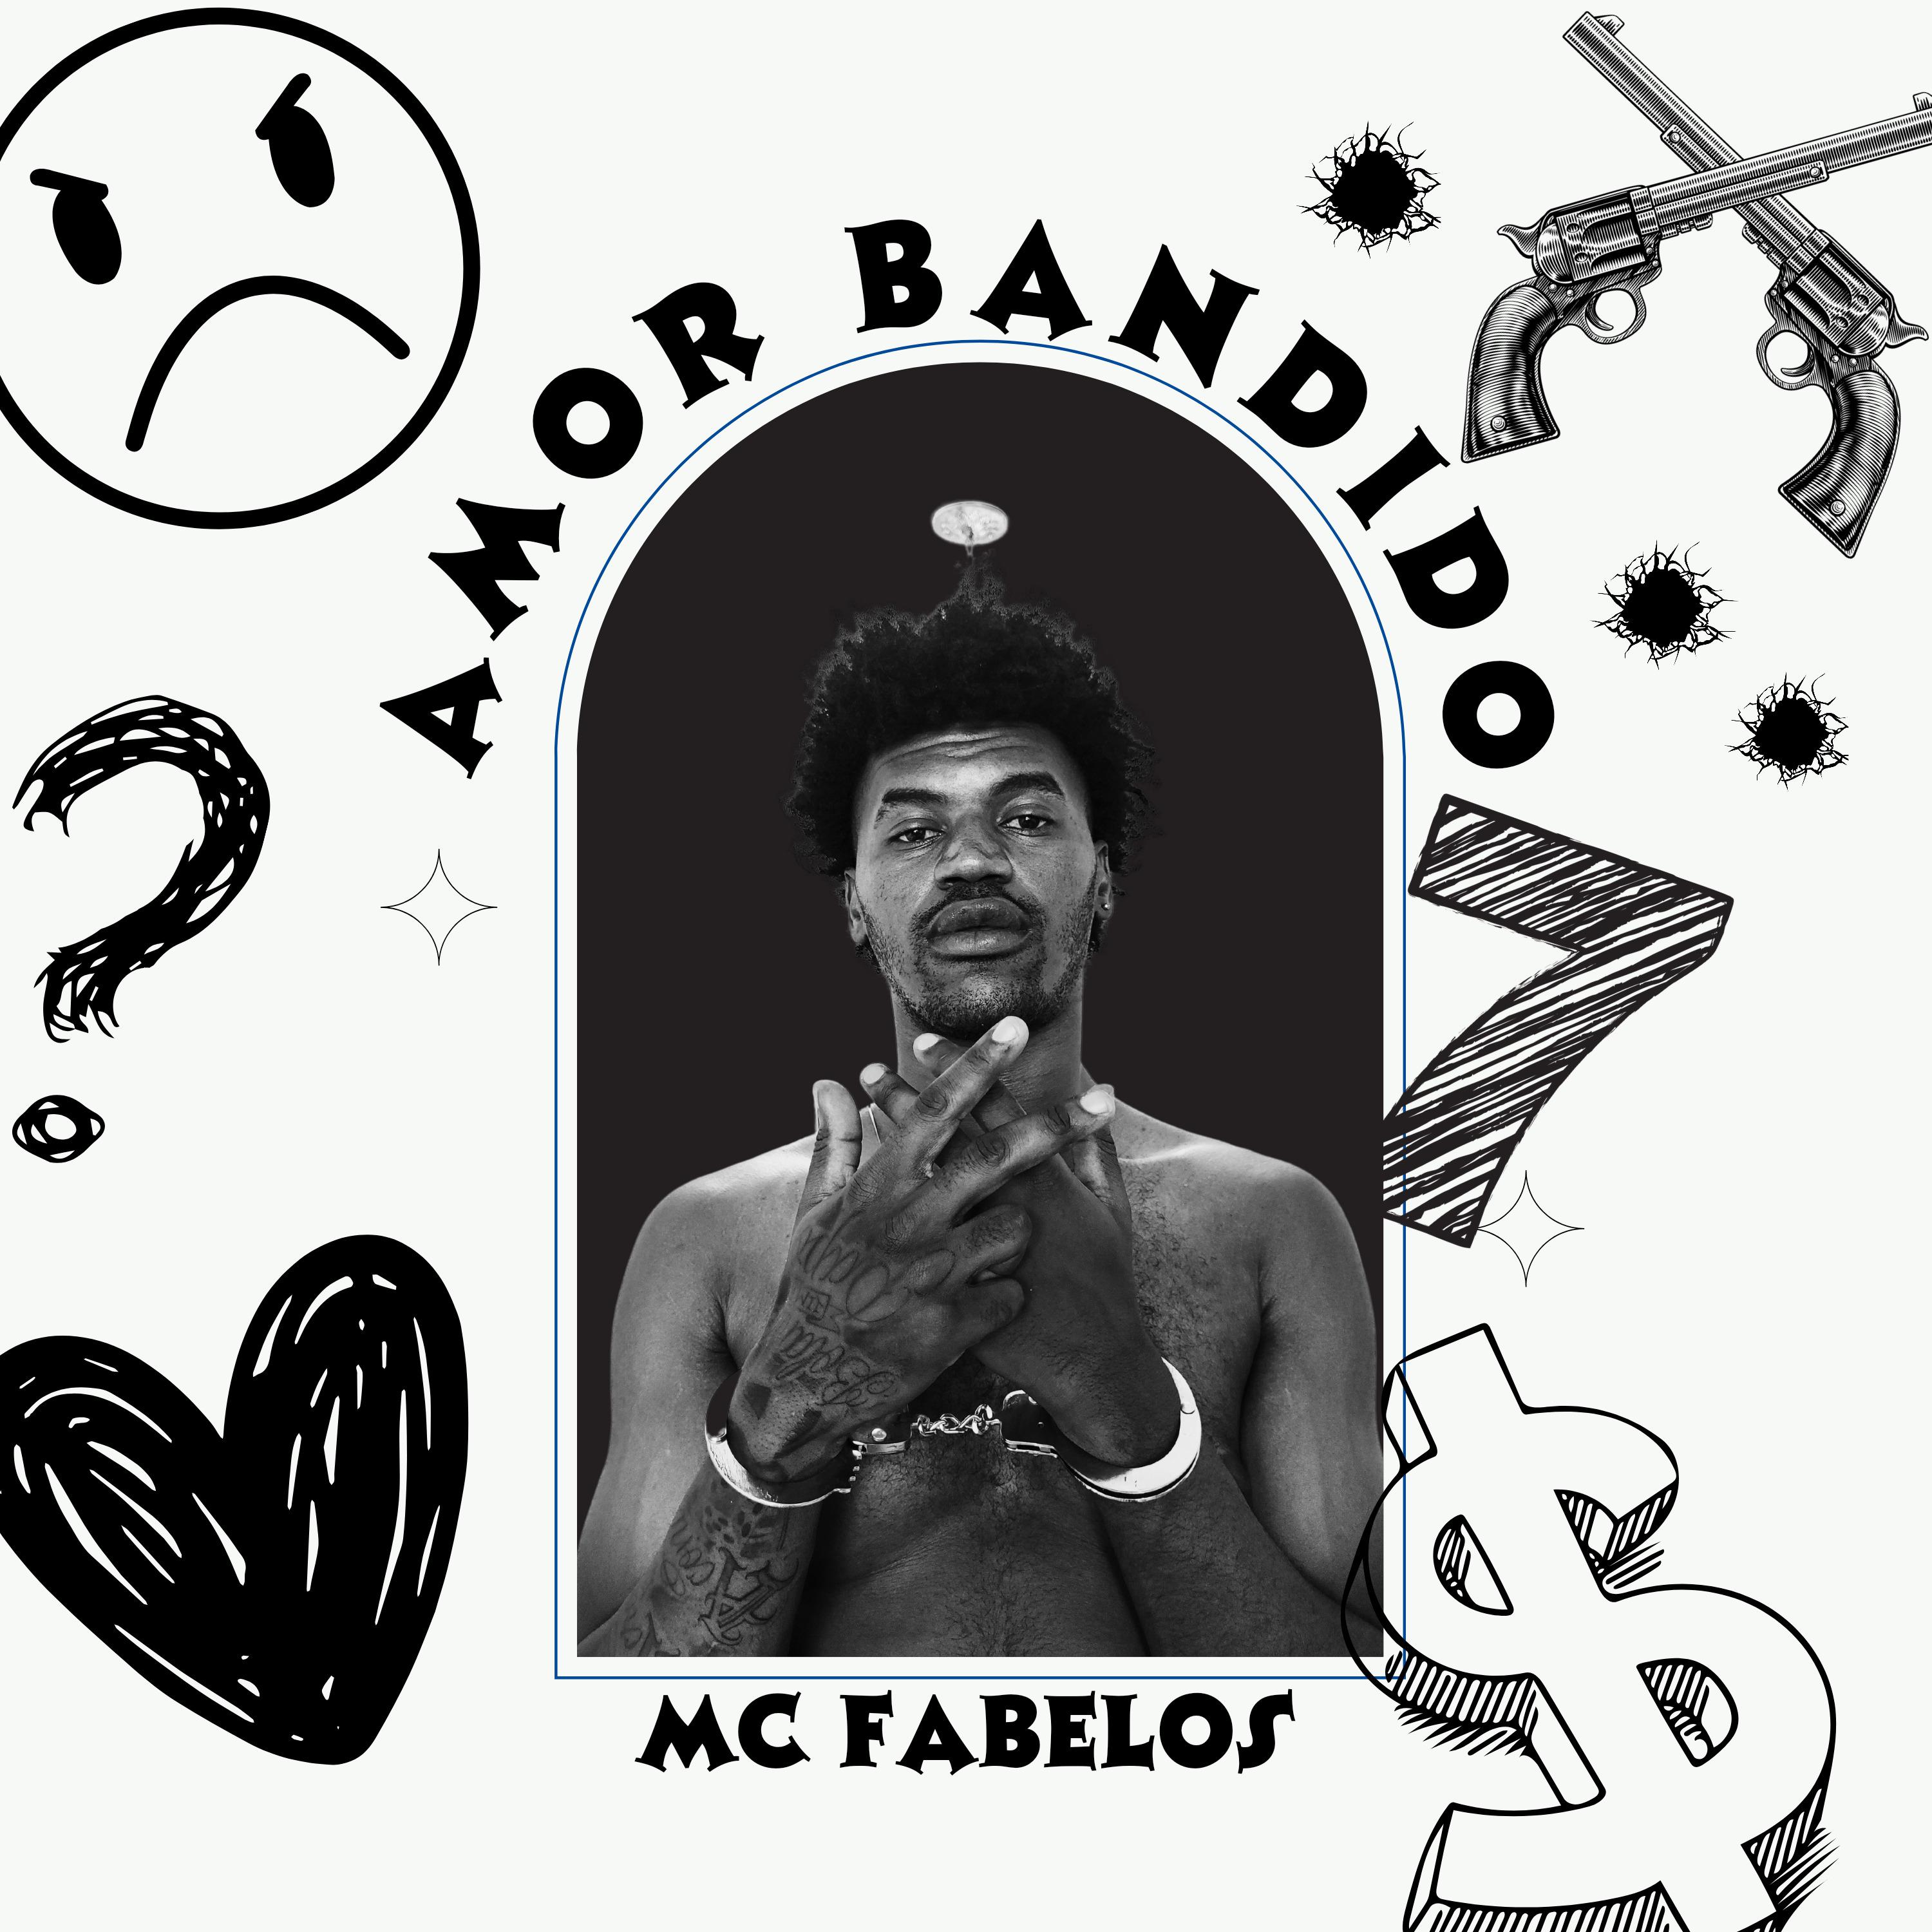 Постер альбома Amor Bandido